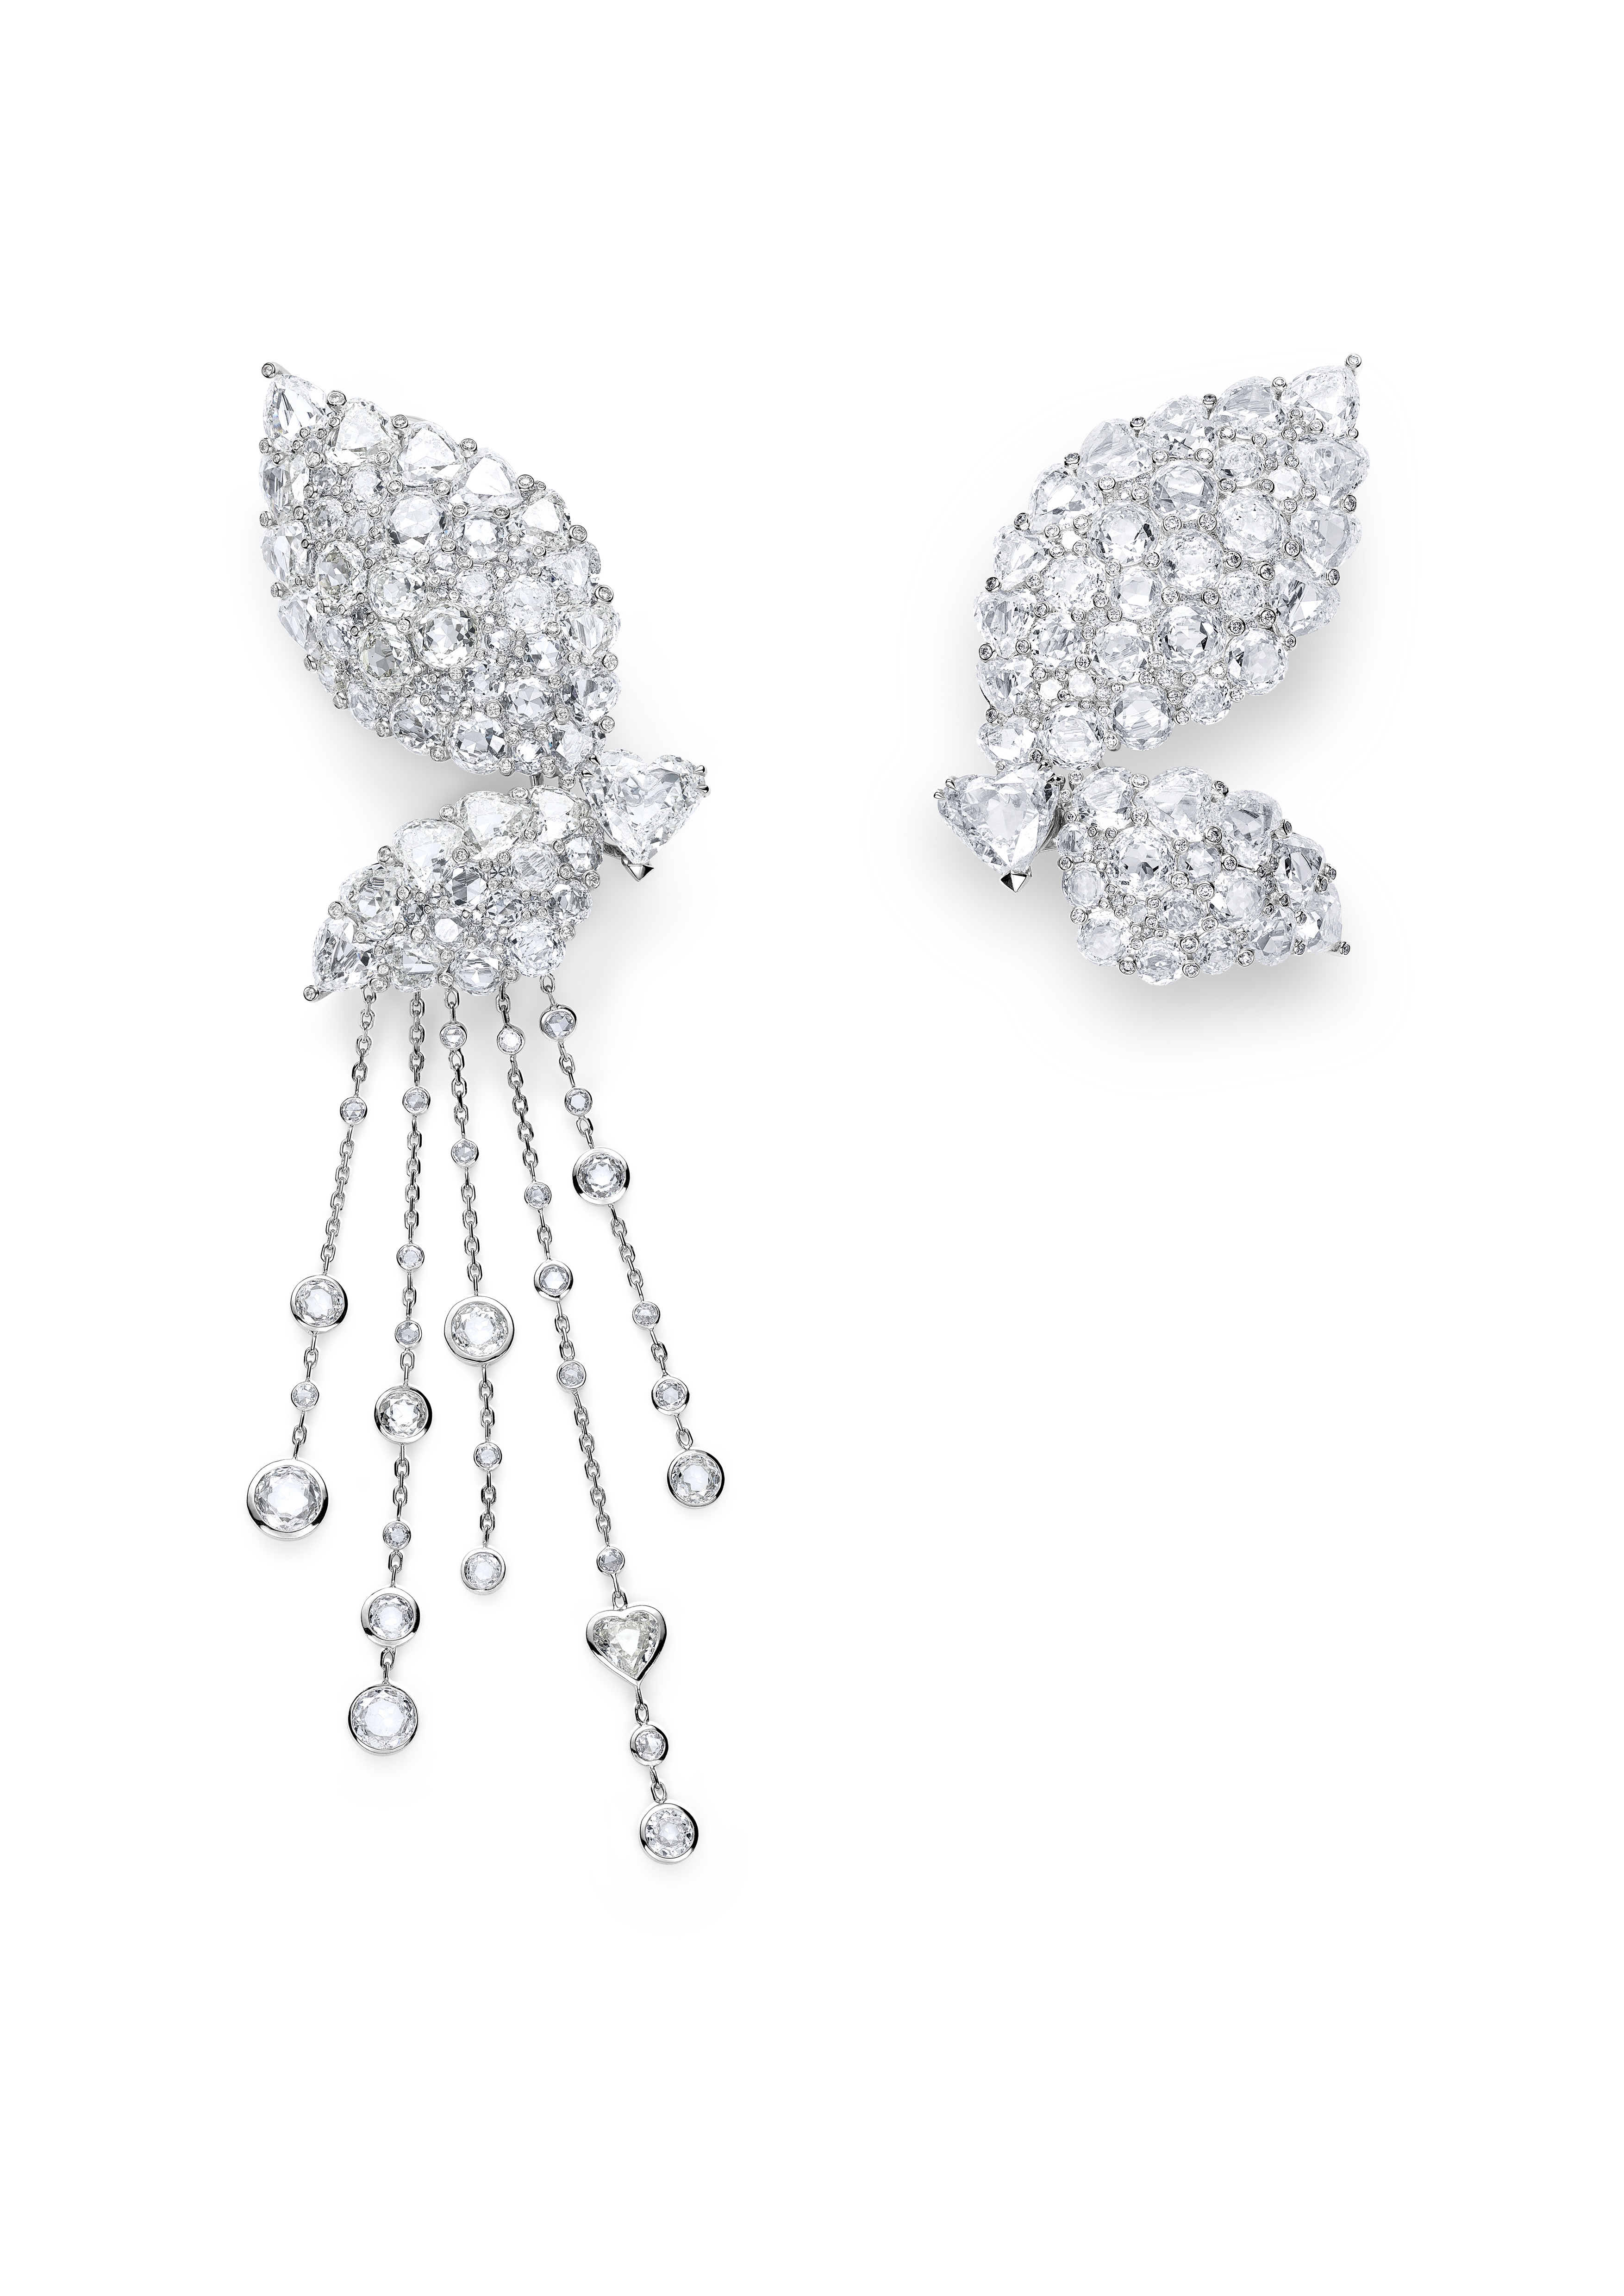 Stunning Chopard Jewelry Creations by Mariah Carey